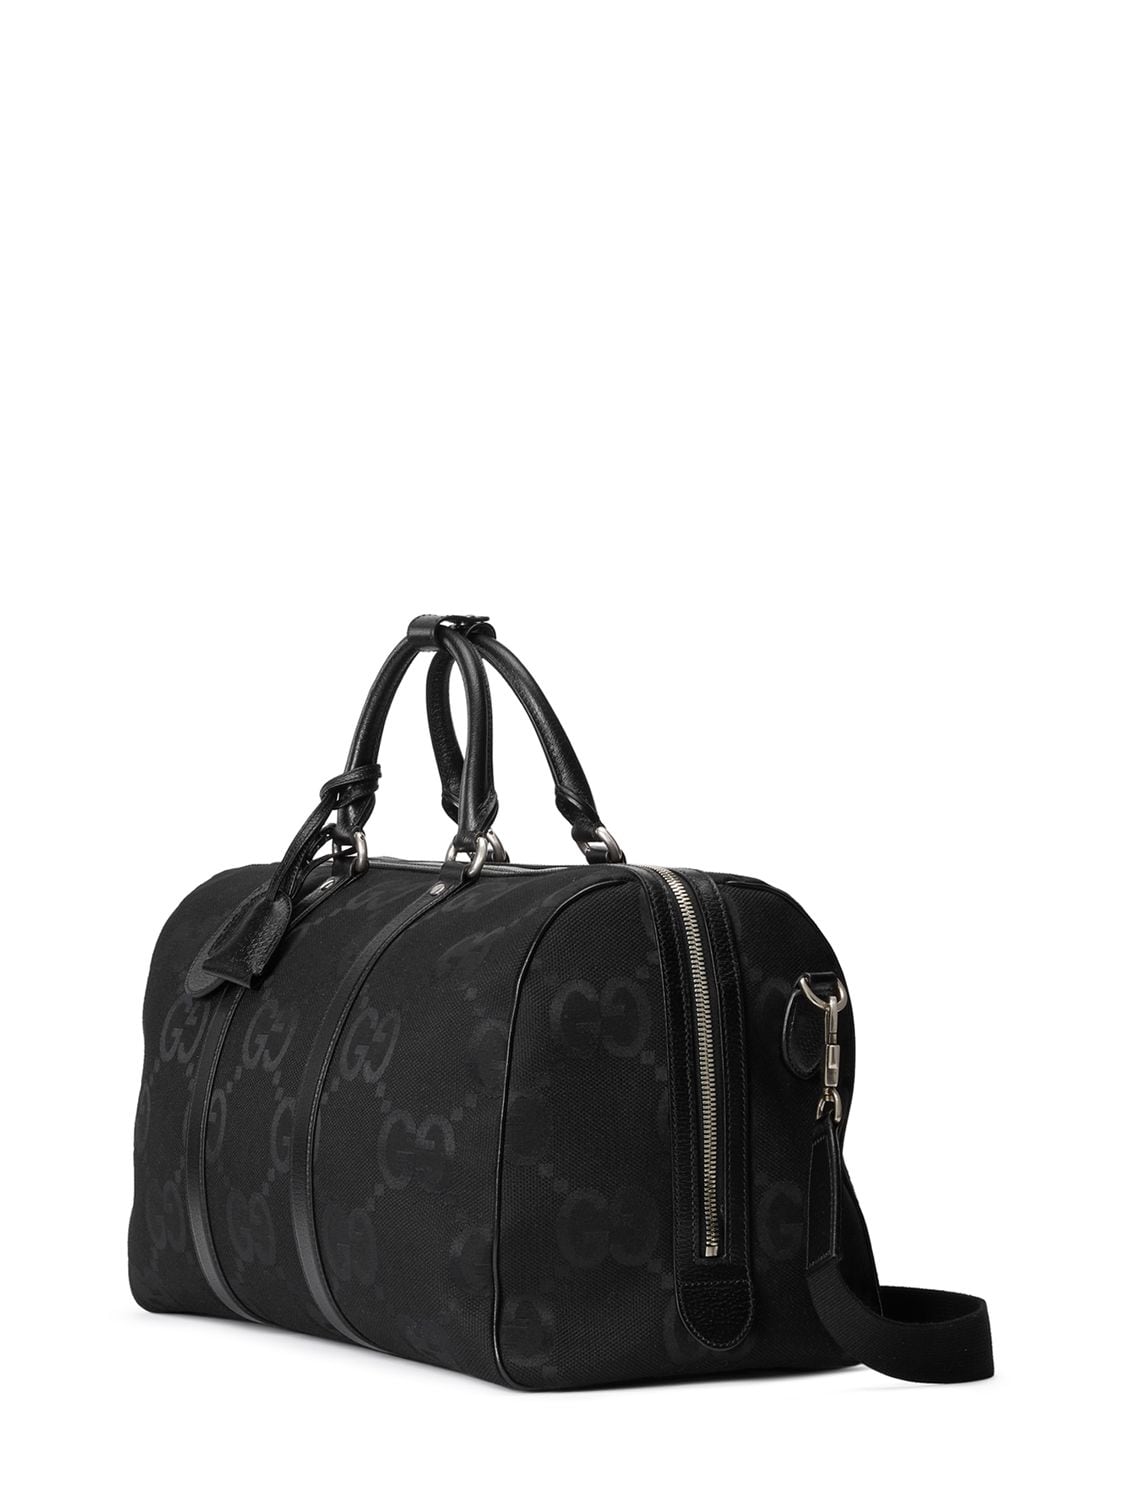 Jumbo GG large duffle bag in black canvas